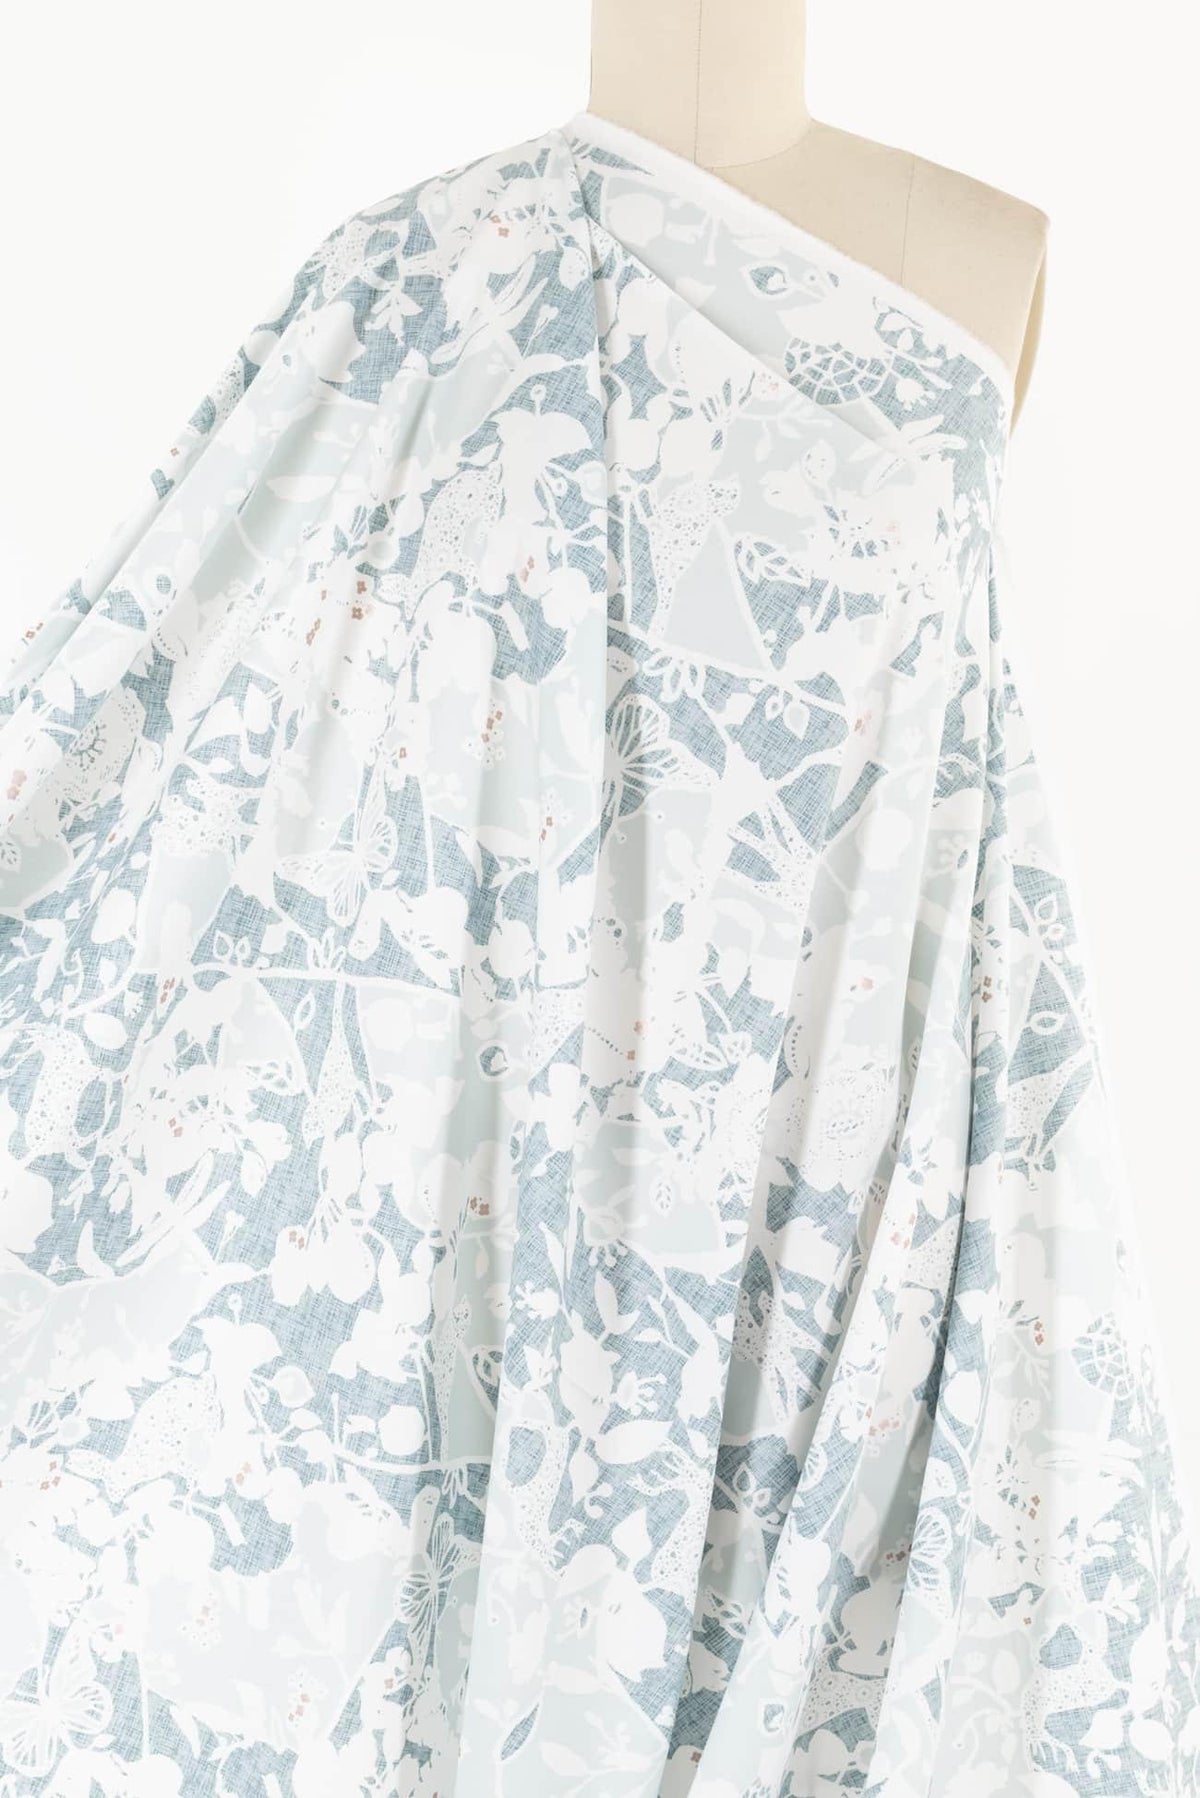 Azure Fauna Cotton Woven - Marcy Tilton Fabrics